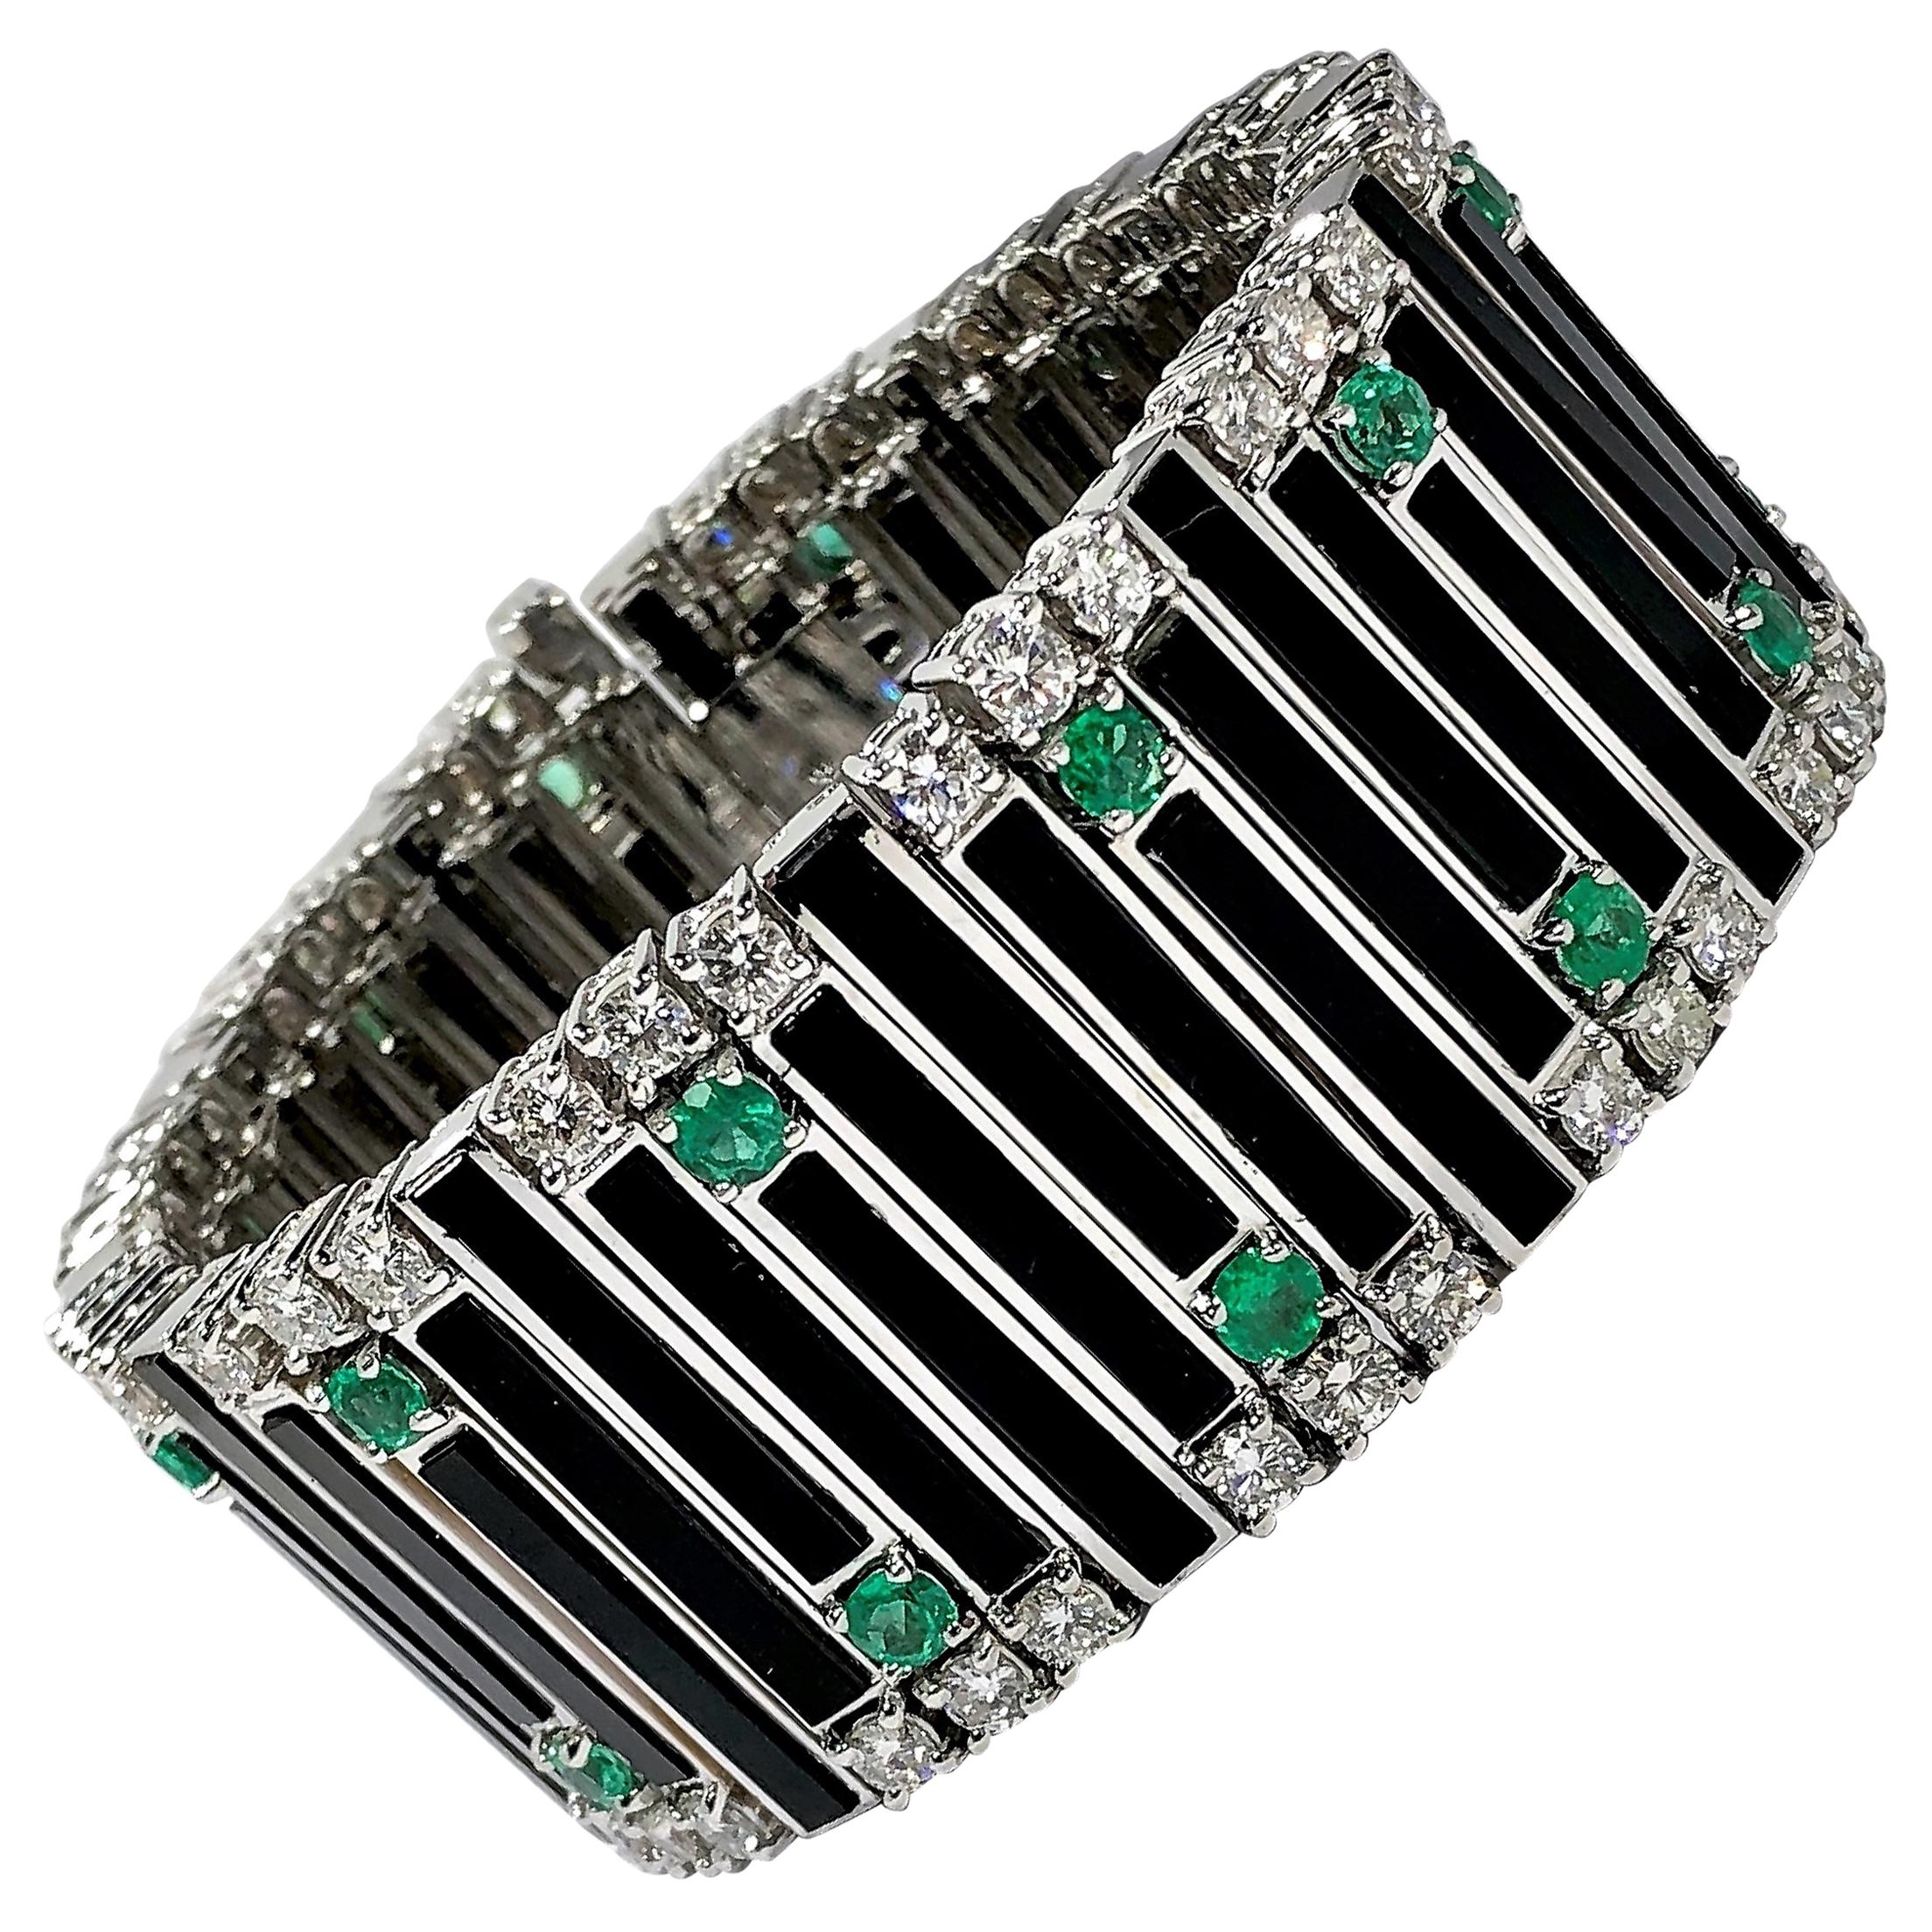 Impressive Emis Beros Onyx, Diamond, and Emerald Bracelet